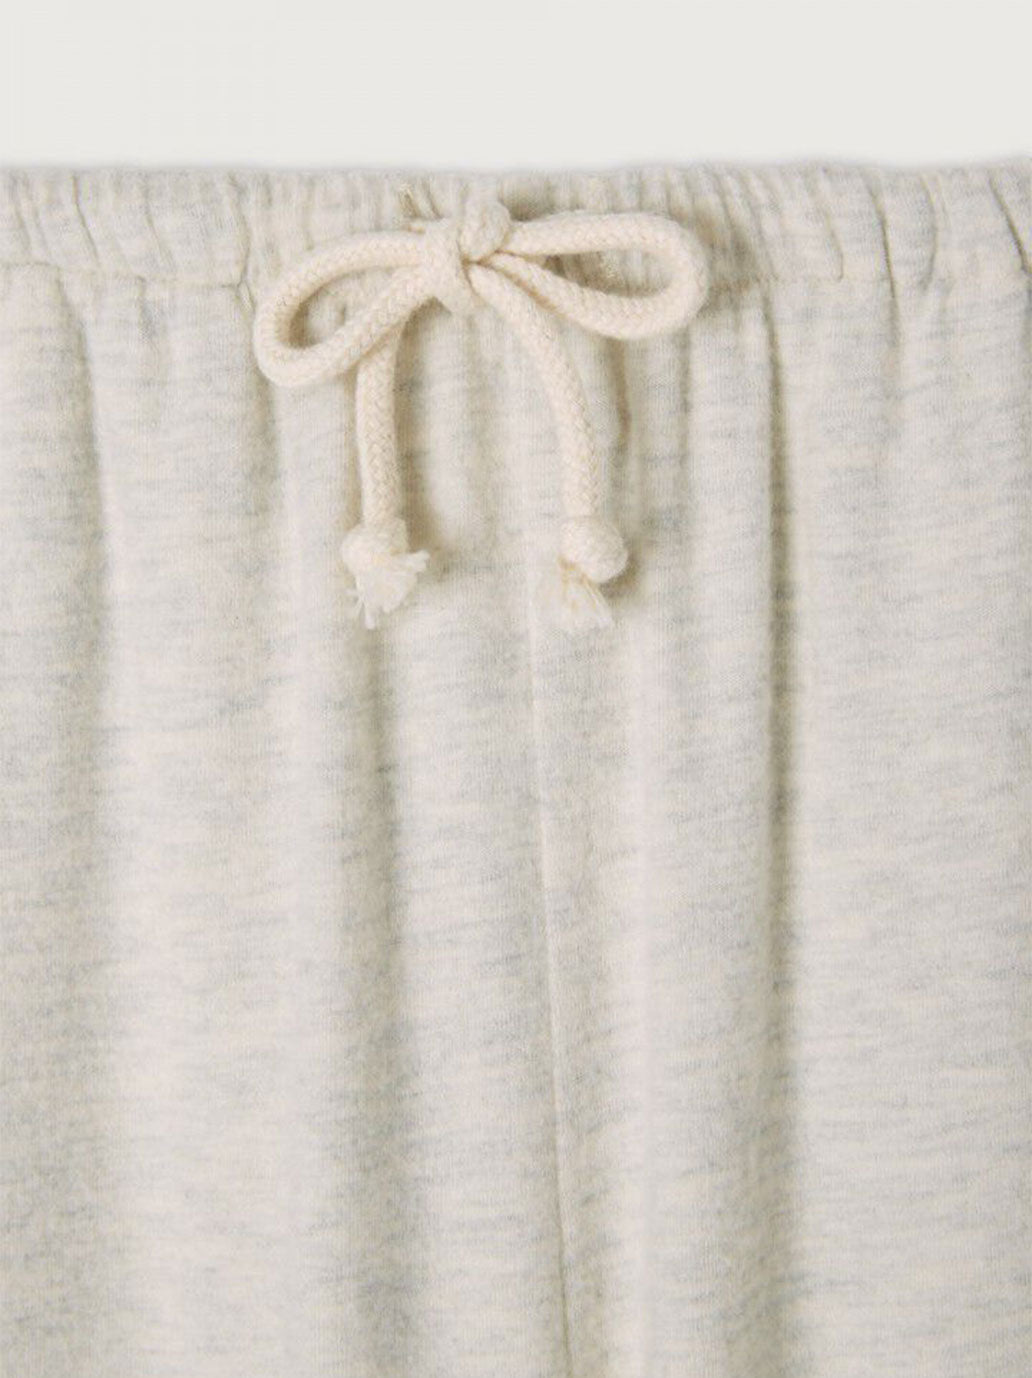 Sweatpants made of soft Ypawood fabric